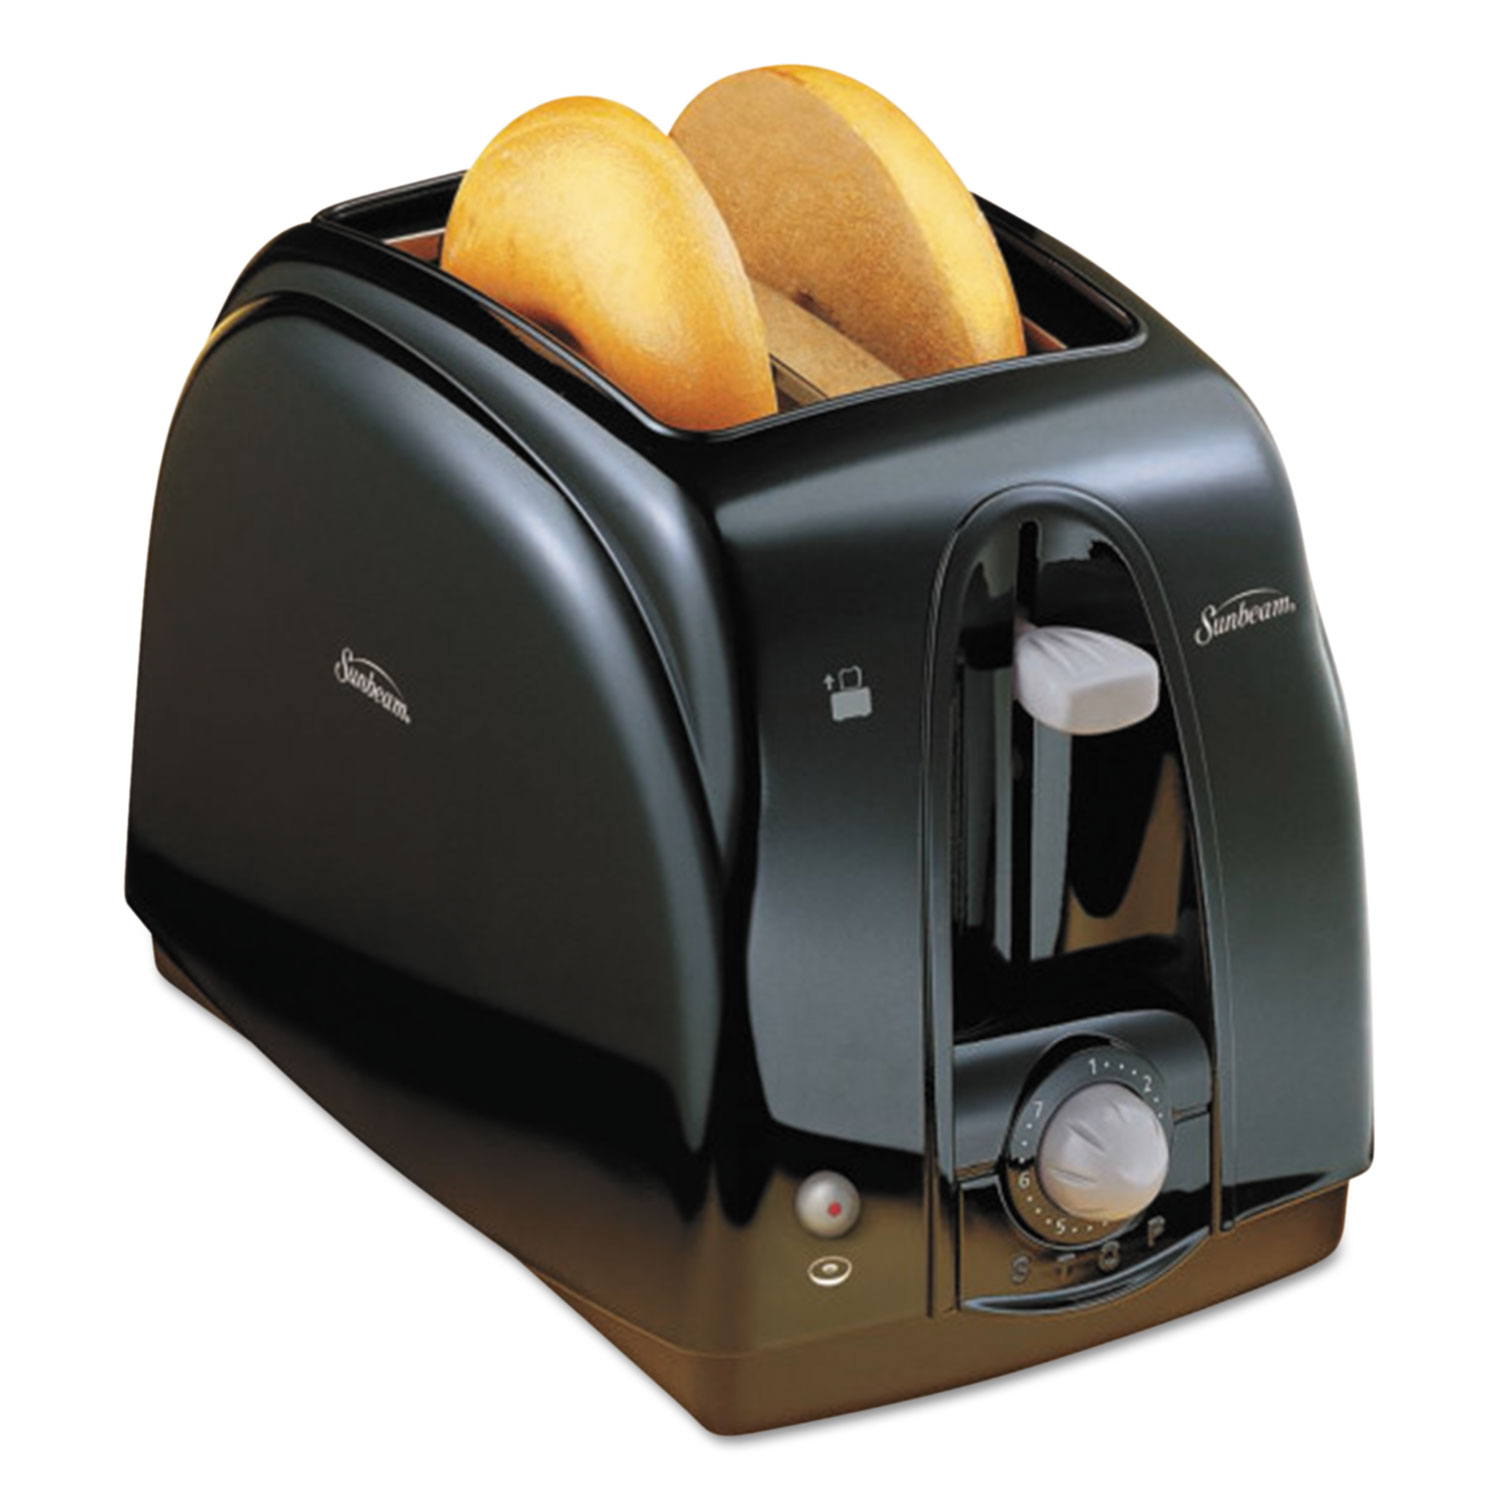  Sunbeam 3910100000 Extra Wide Slot Toaster, 2-Slice, 7 x 11 1/2 x 7.8, Black (SUN39101) 